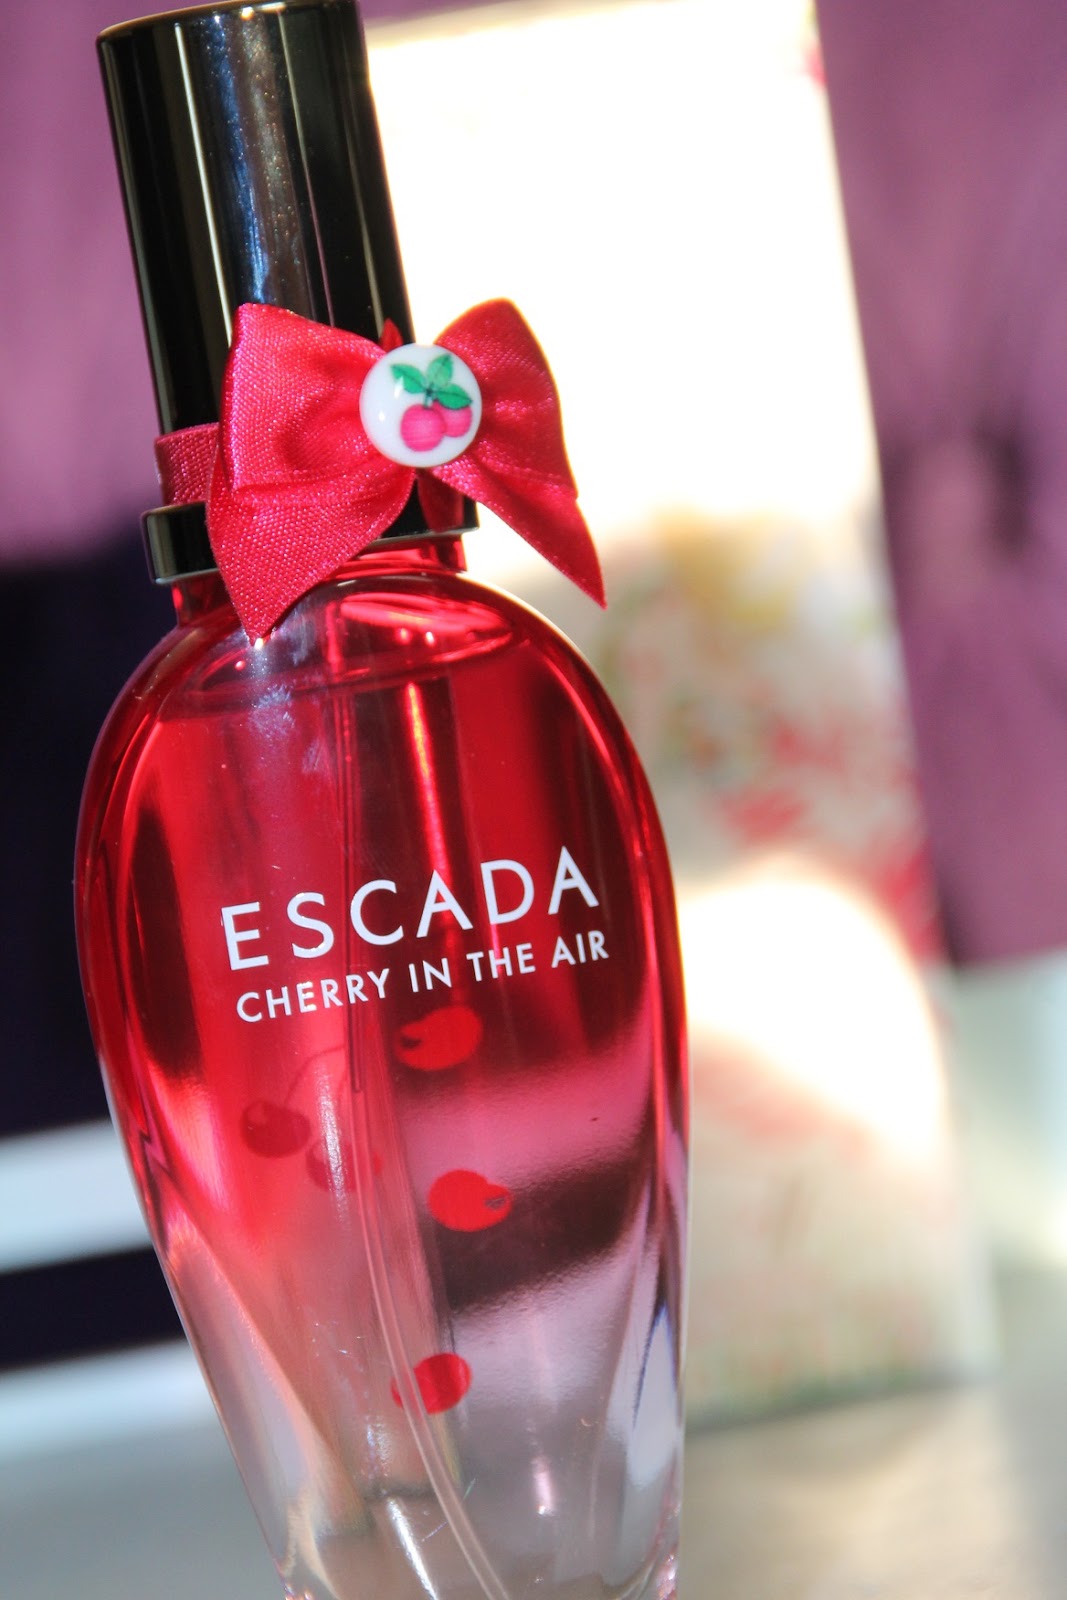 Crystal's Reviews: Escada Cherry in the air